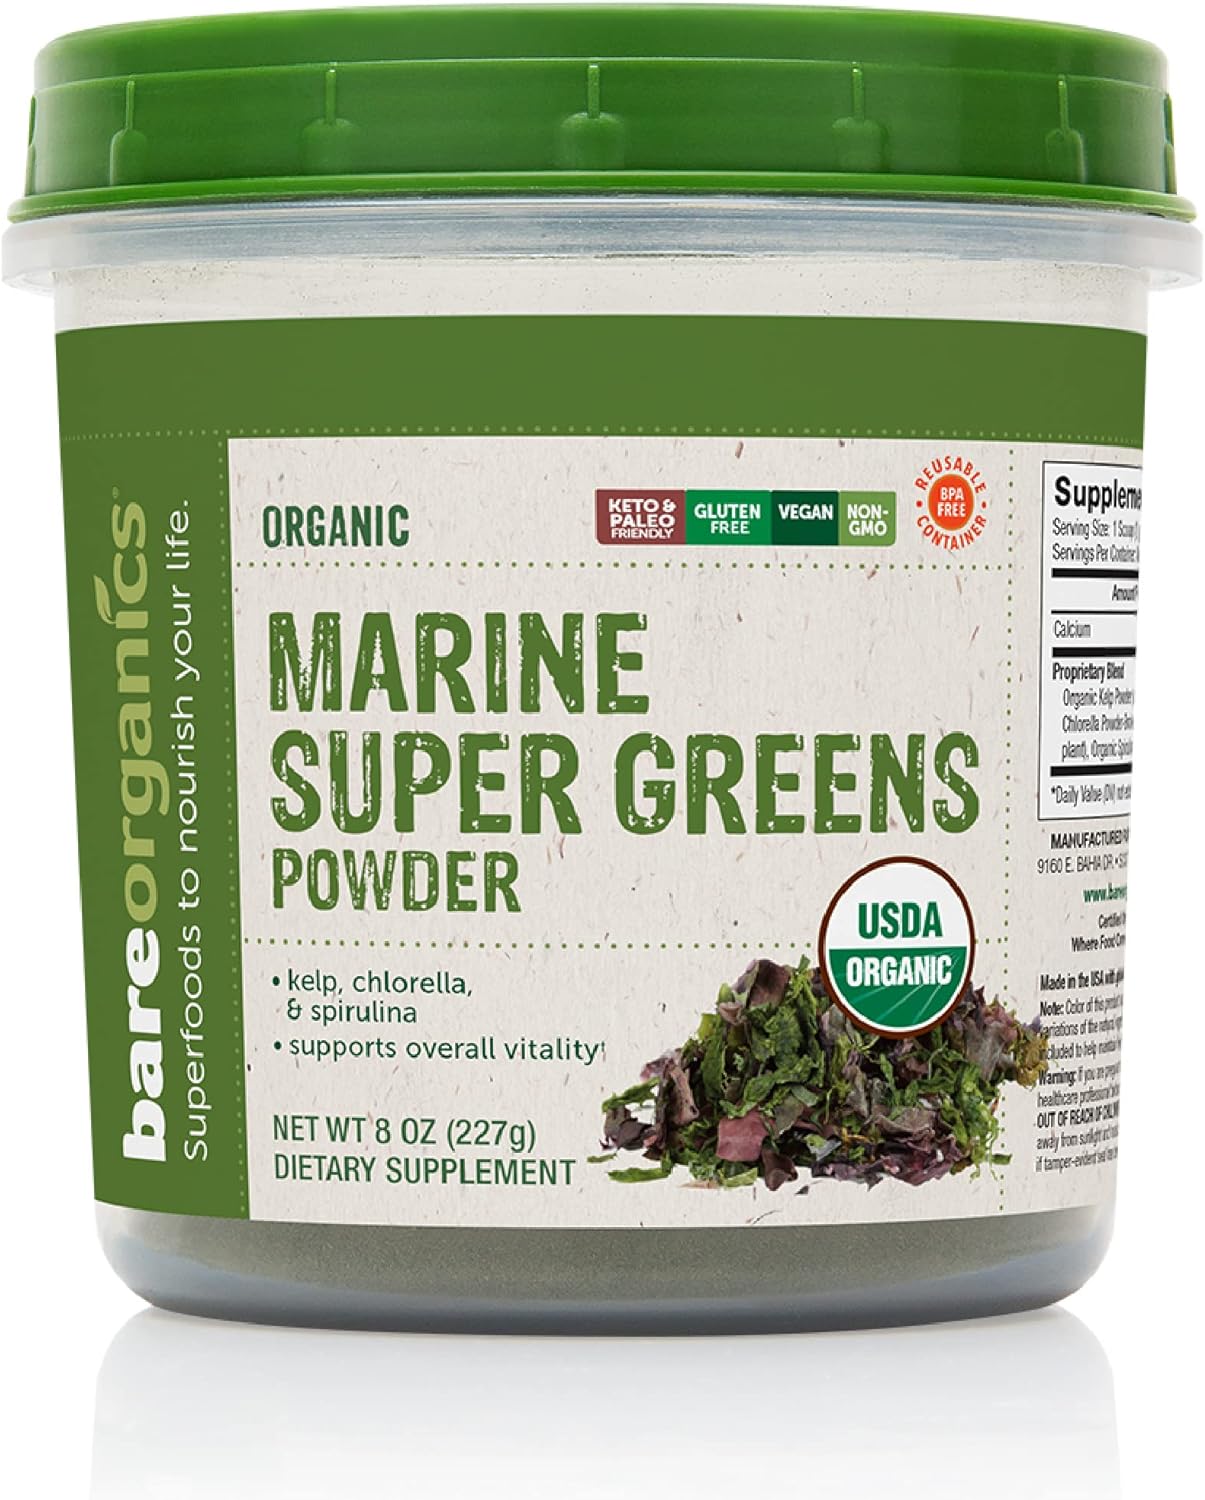 BareOrganics Marine Super Greens Powder | USDA Organic, Gluten-Free, V